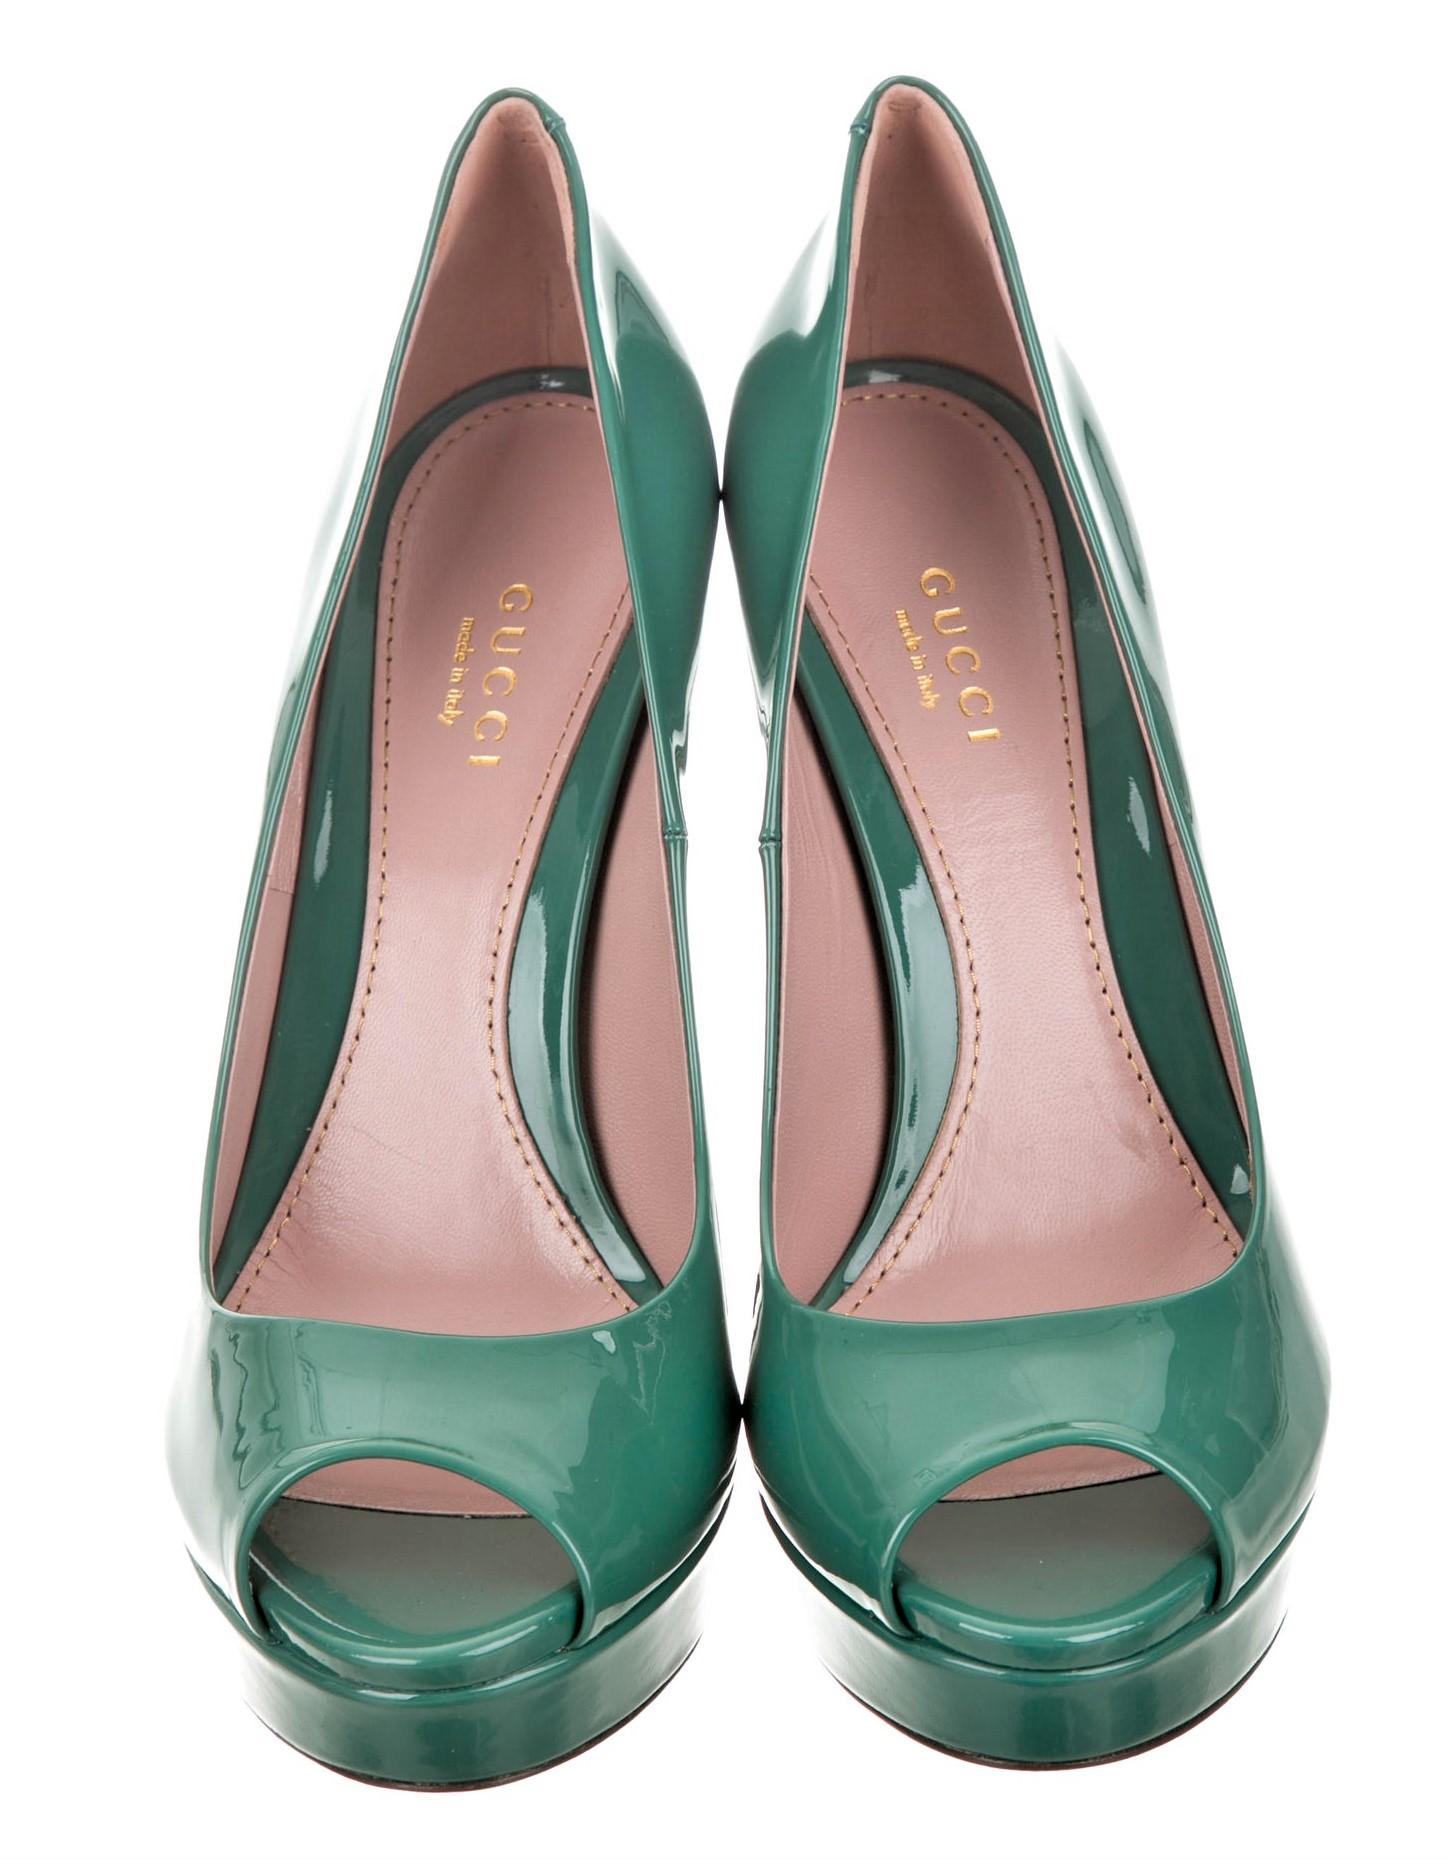 sage green heels